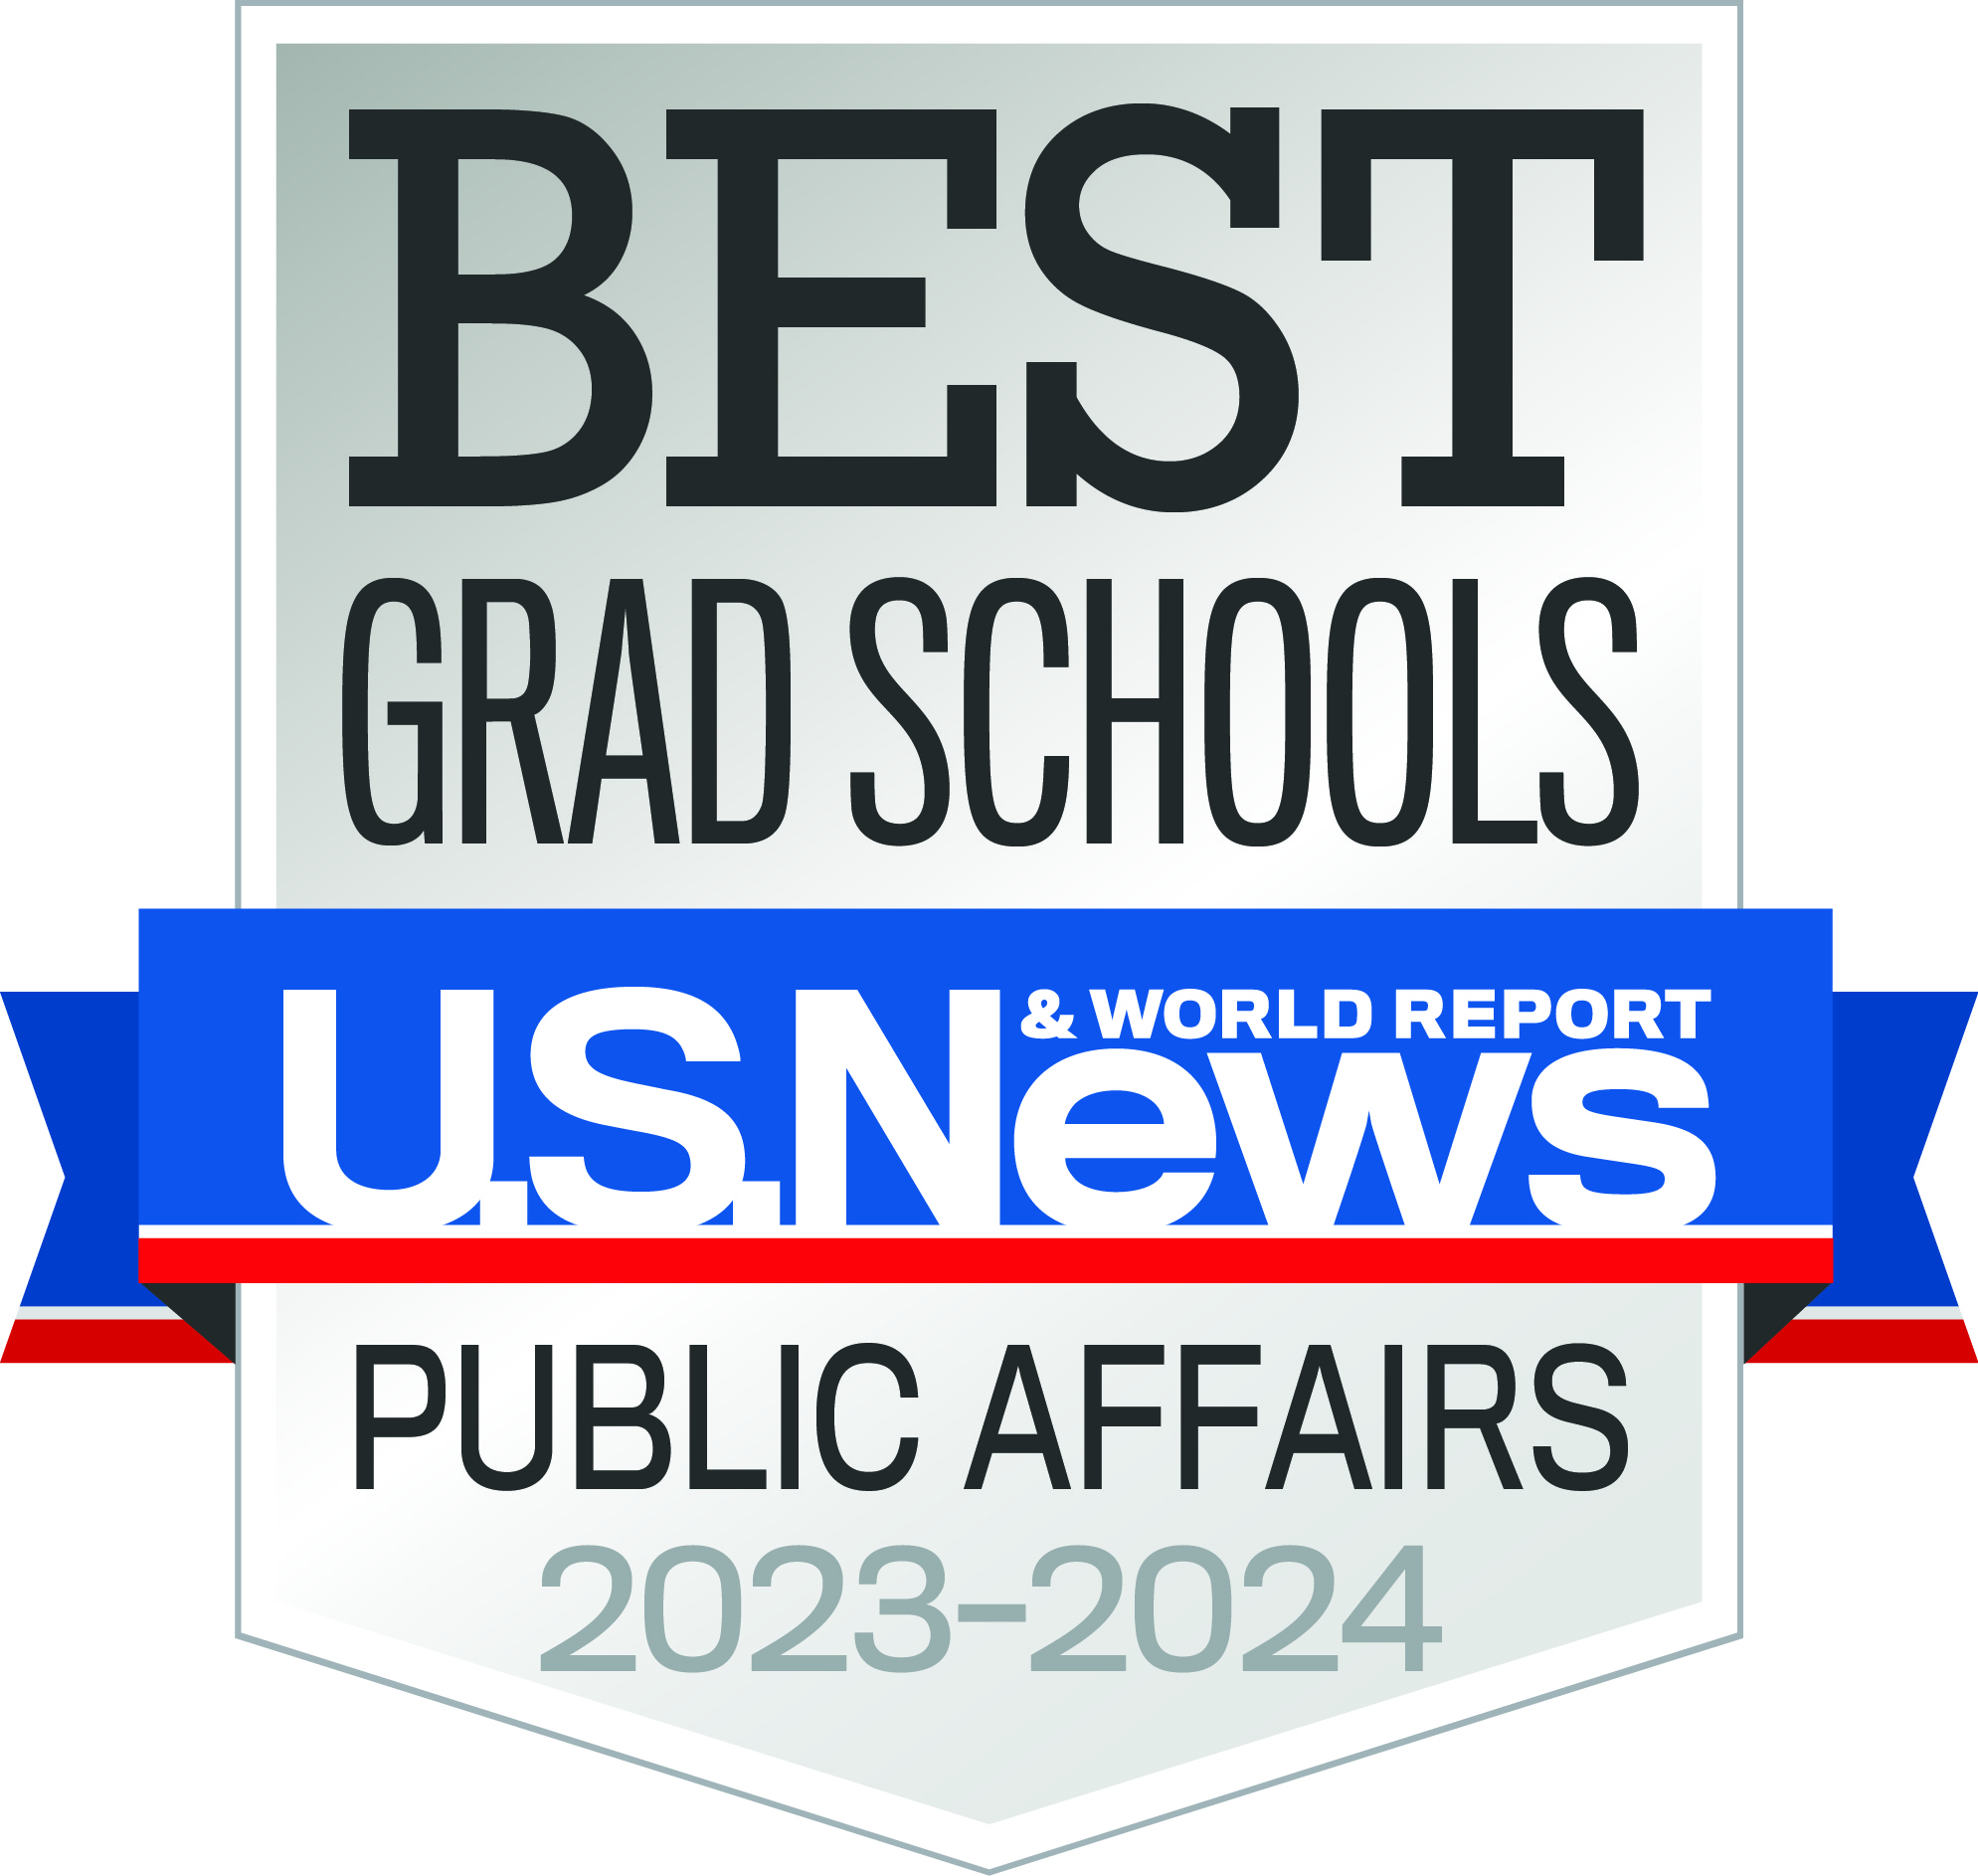 US News Rankings logo for Best Public Affairs Programs for 2023